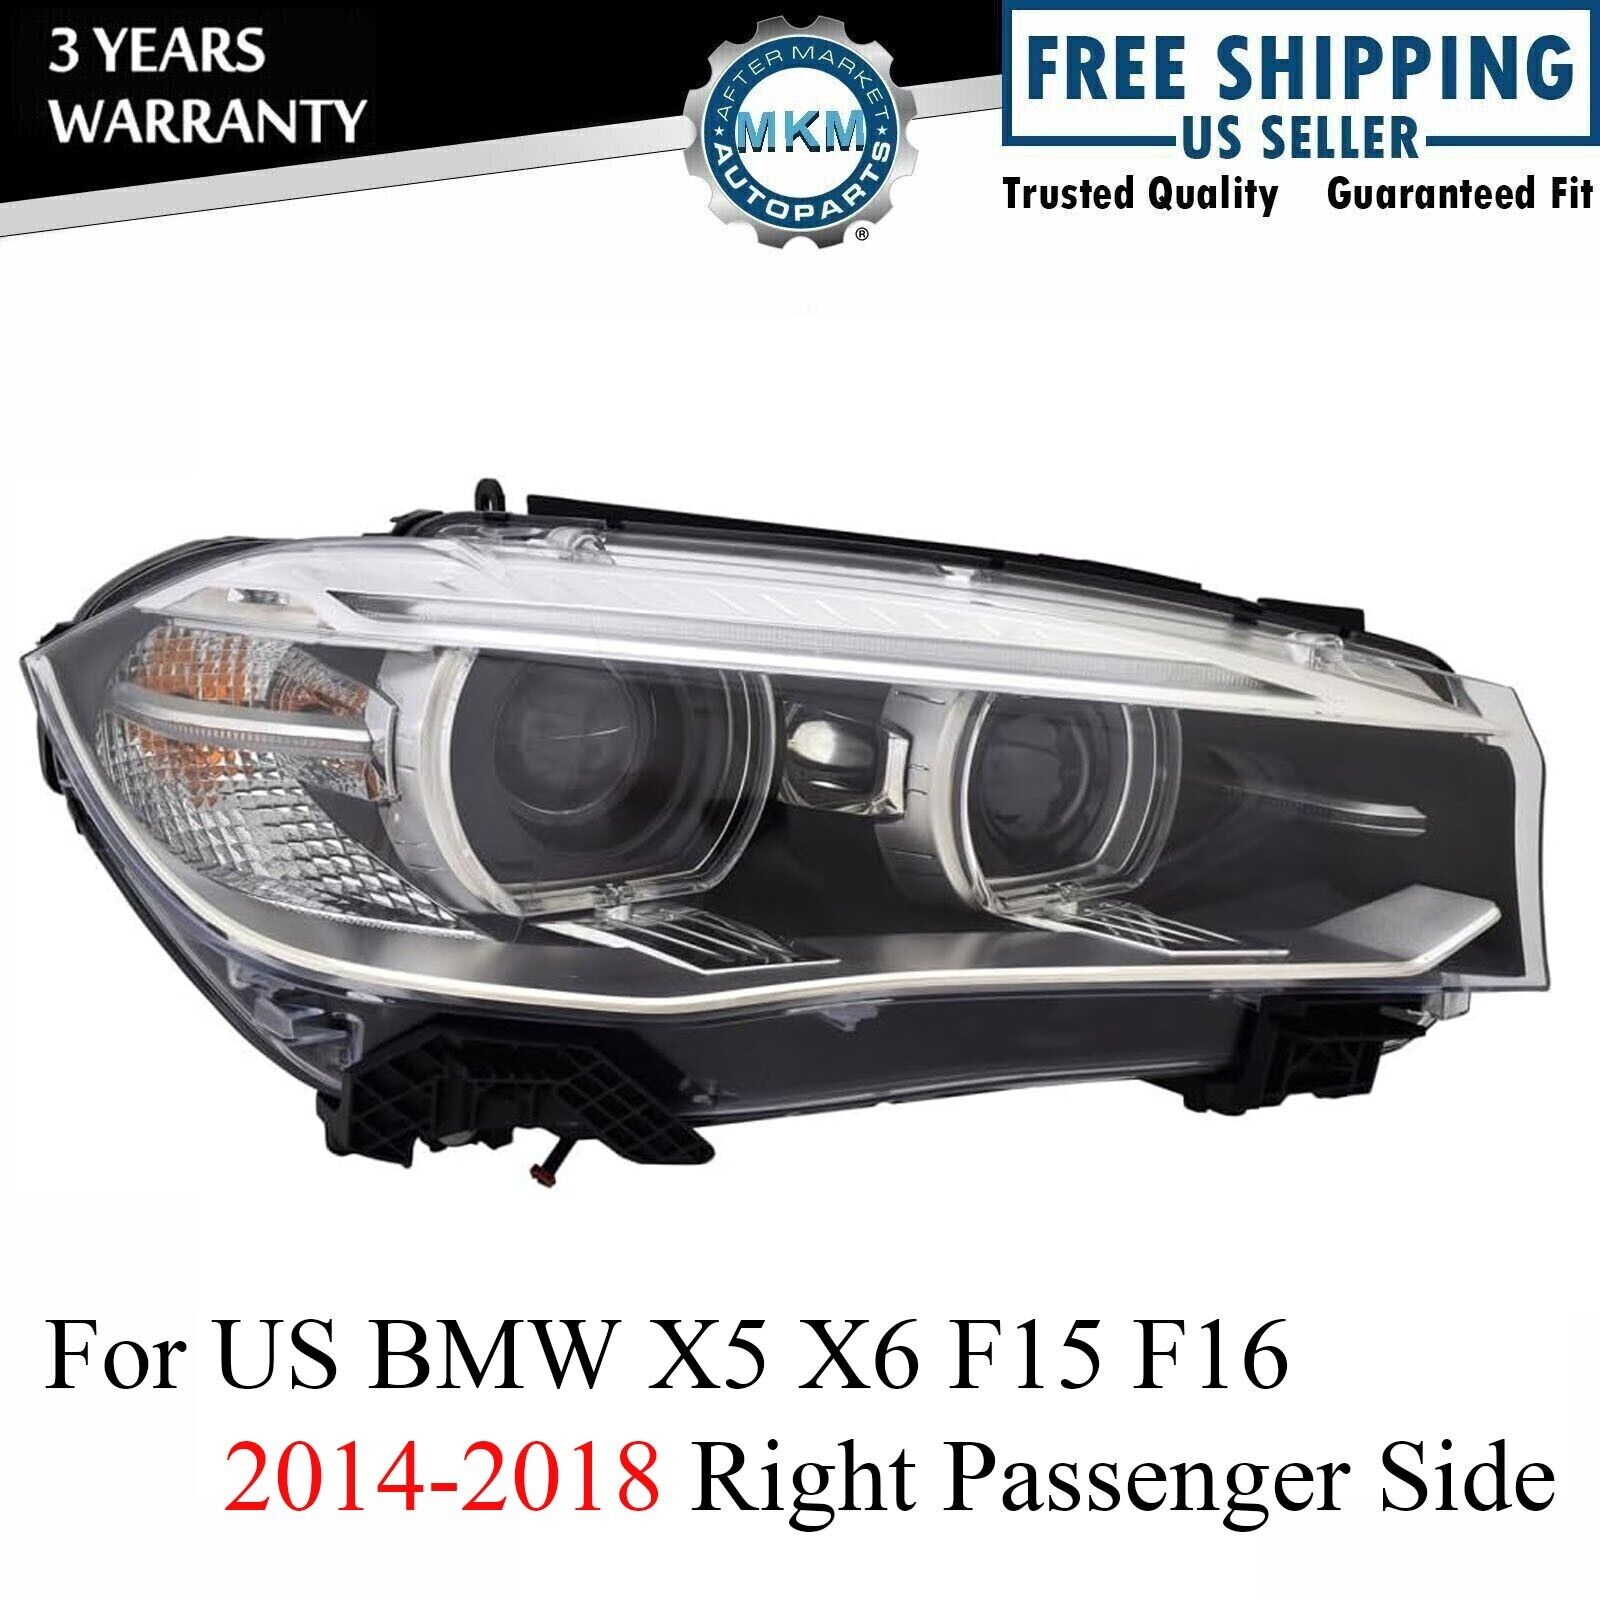 For BMW F15 F16 X5 X6 2014-2018 Right Passenger Side Xenon Adaptive Headlight US